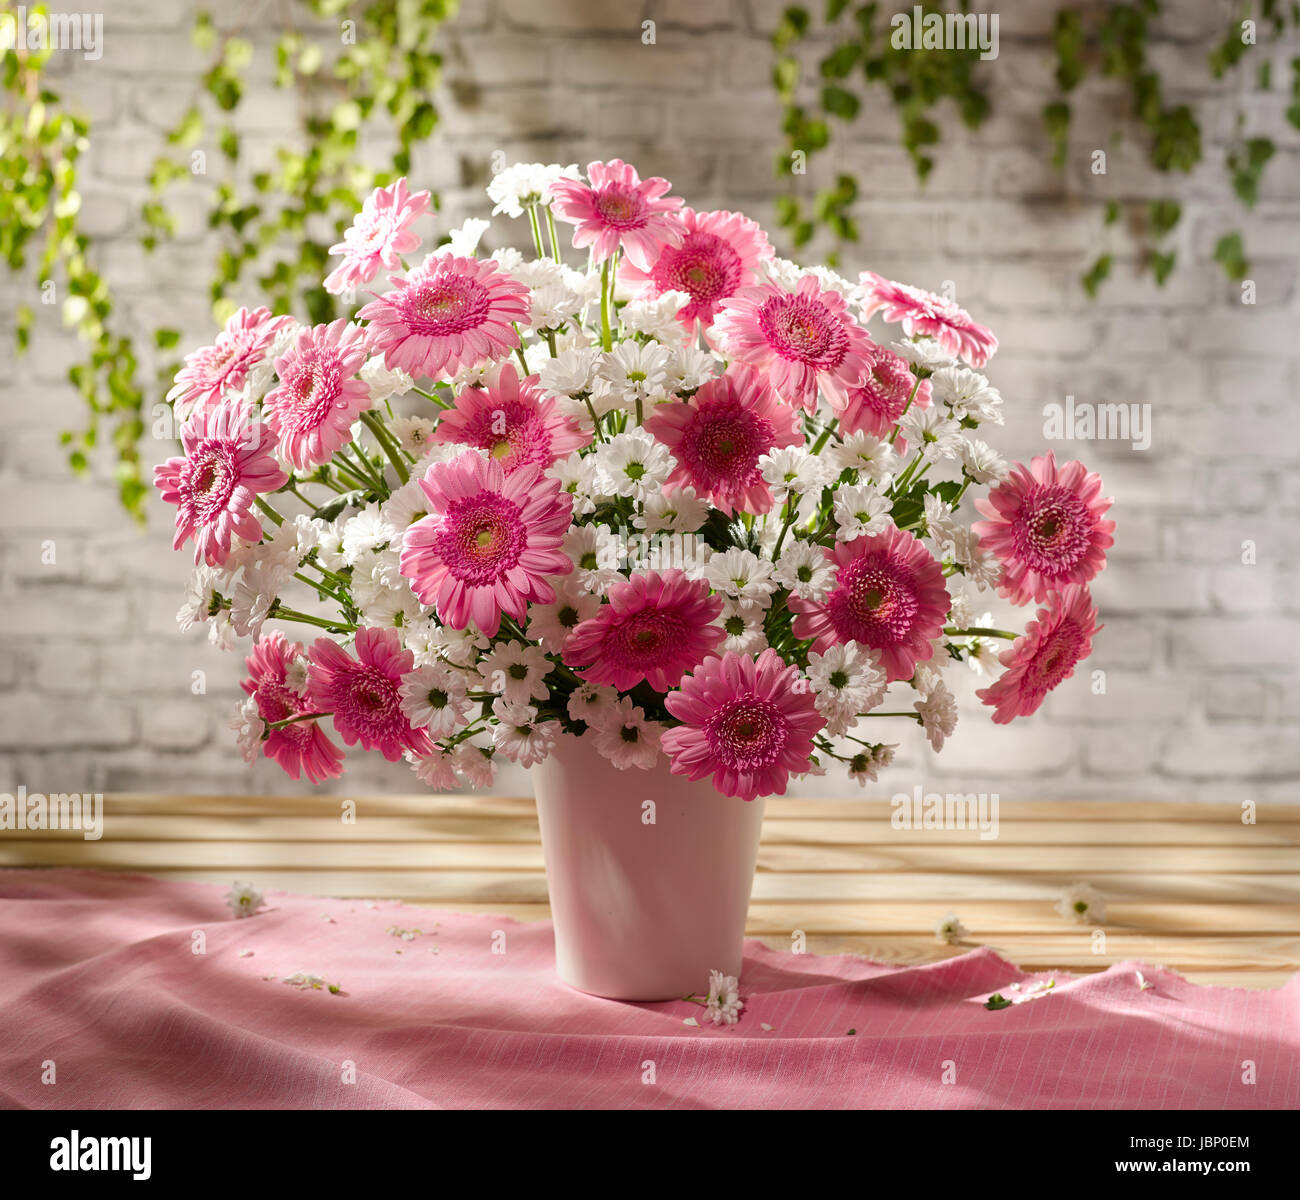 Bouquet of flowers including gerberas. Stock Photo